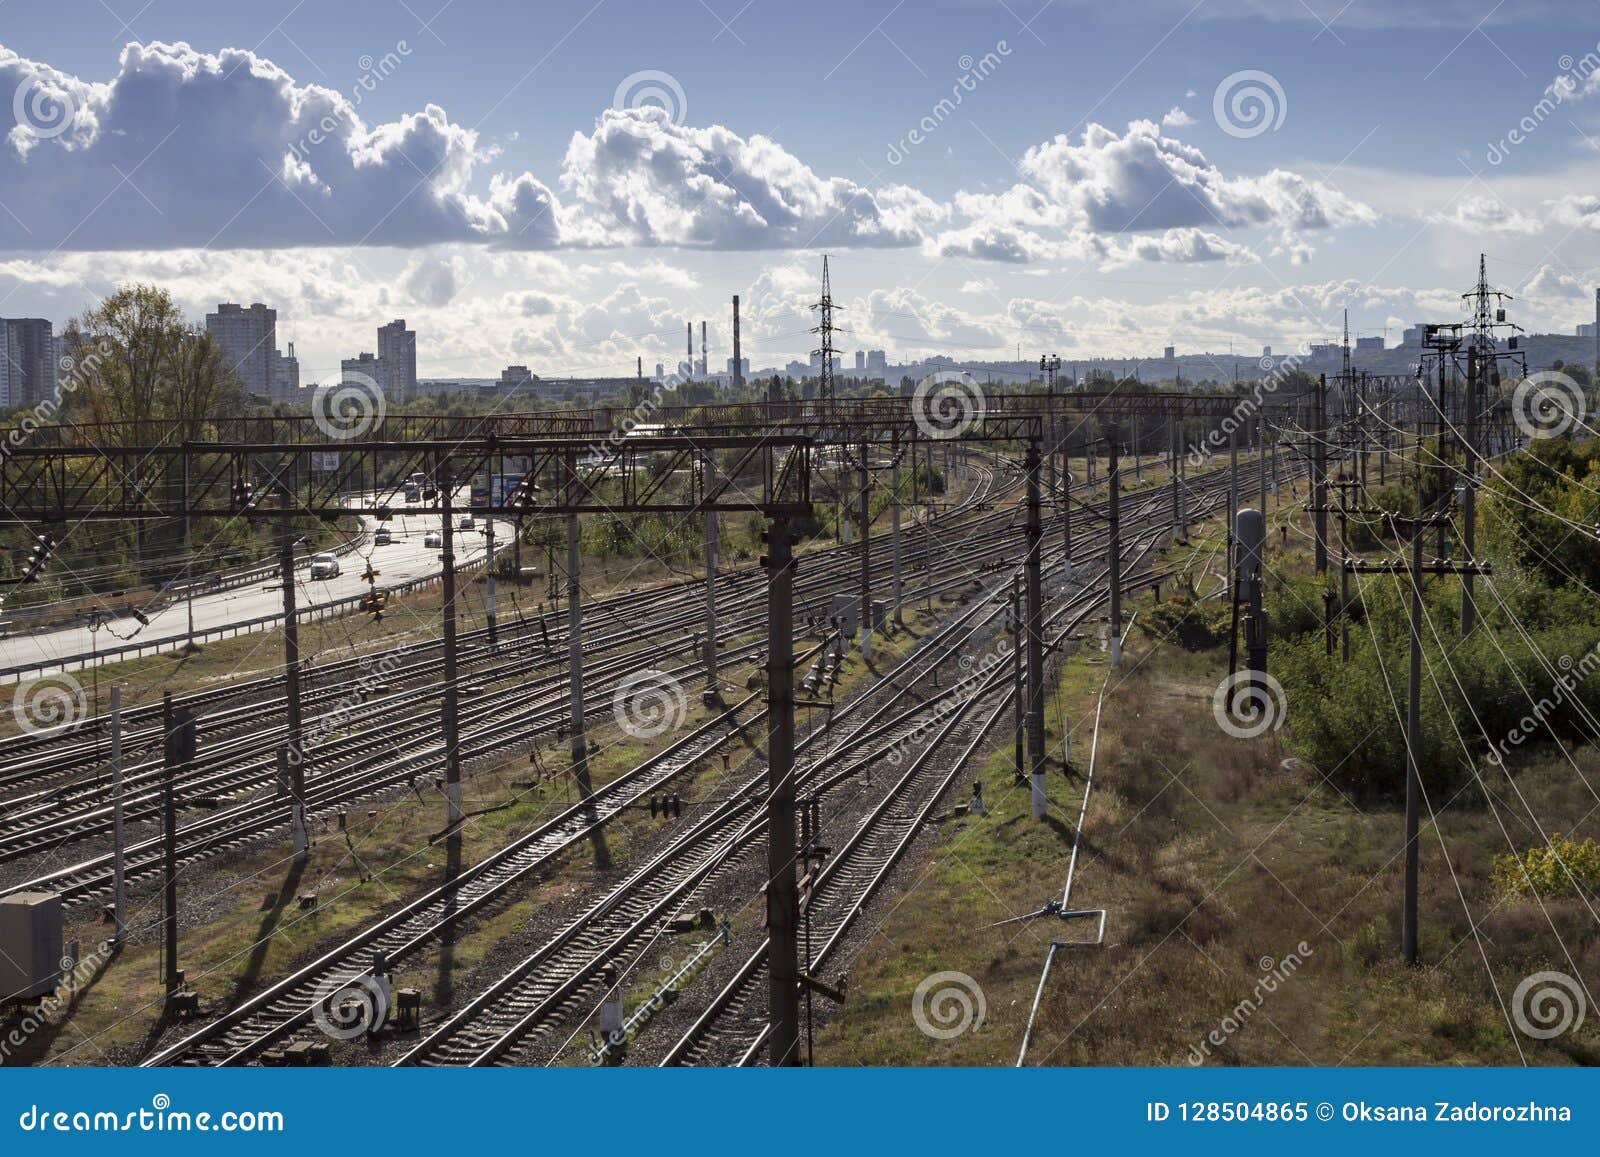 railroad urbanistic landscape. no people. perspective view